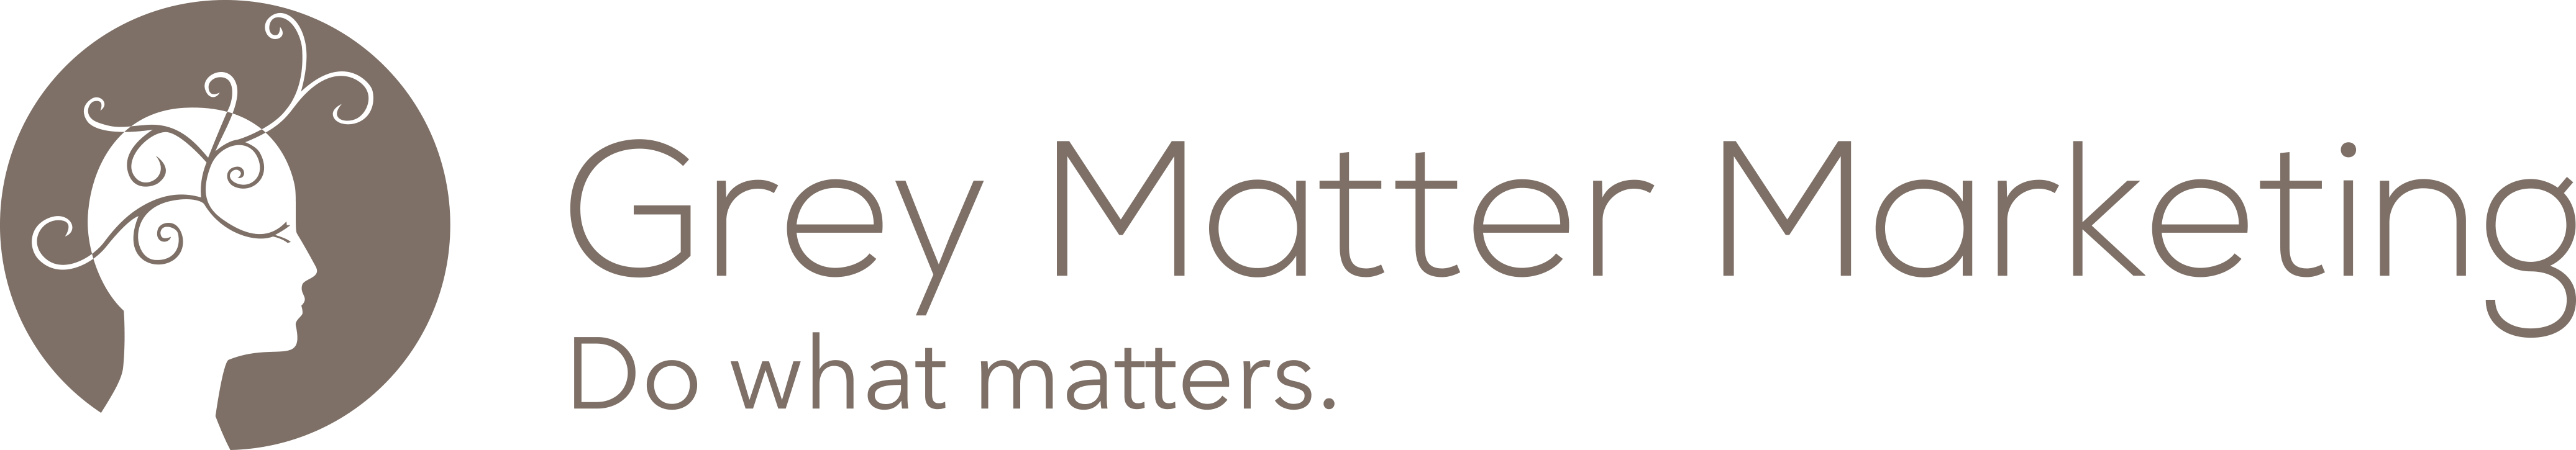 greymattermarketing logo